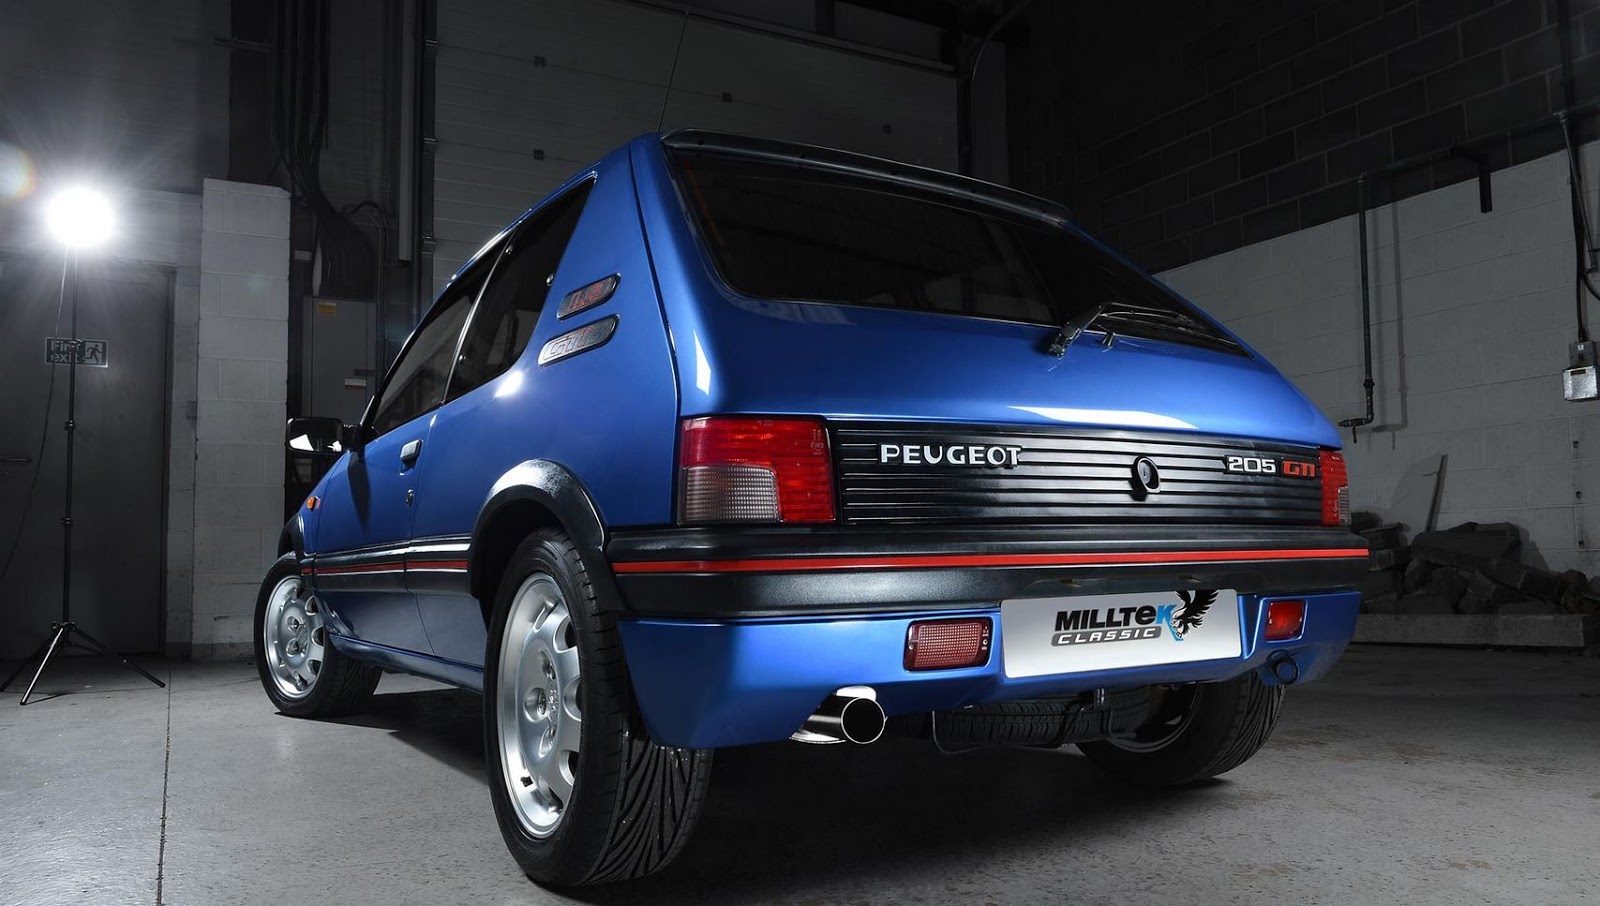 Peugeot_205_GTI_exhaust_by_Milltek_Classic_01